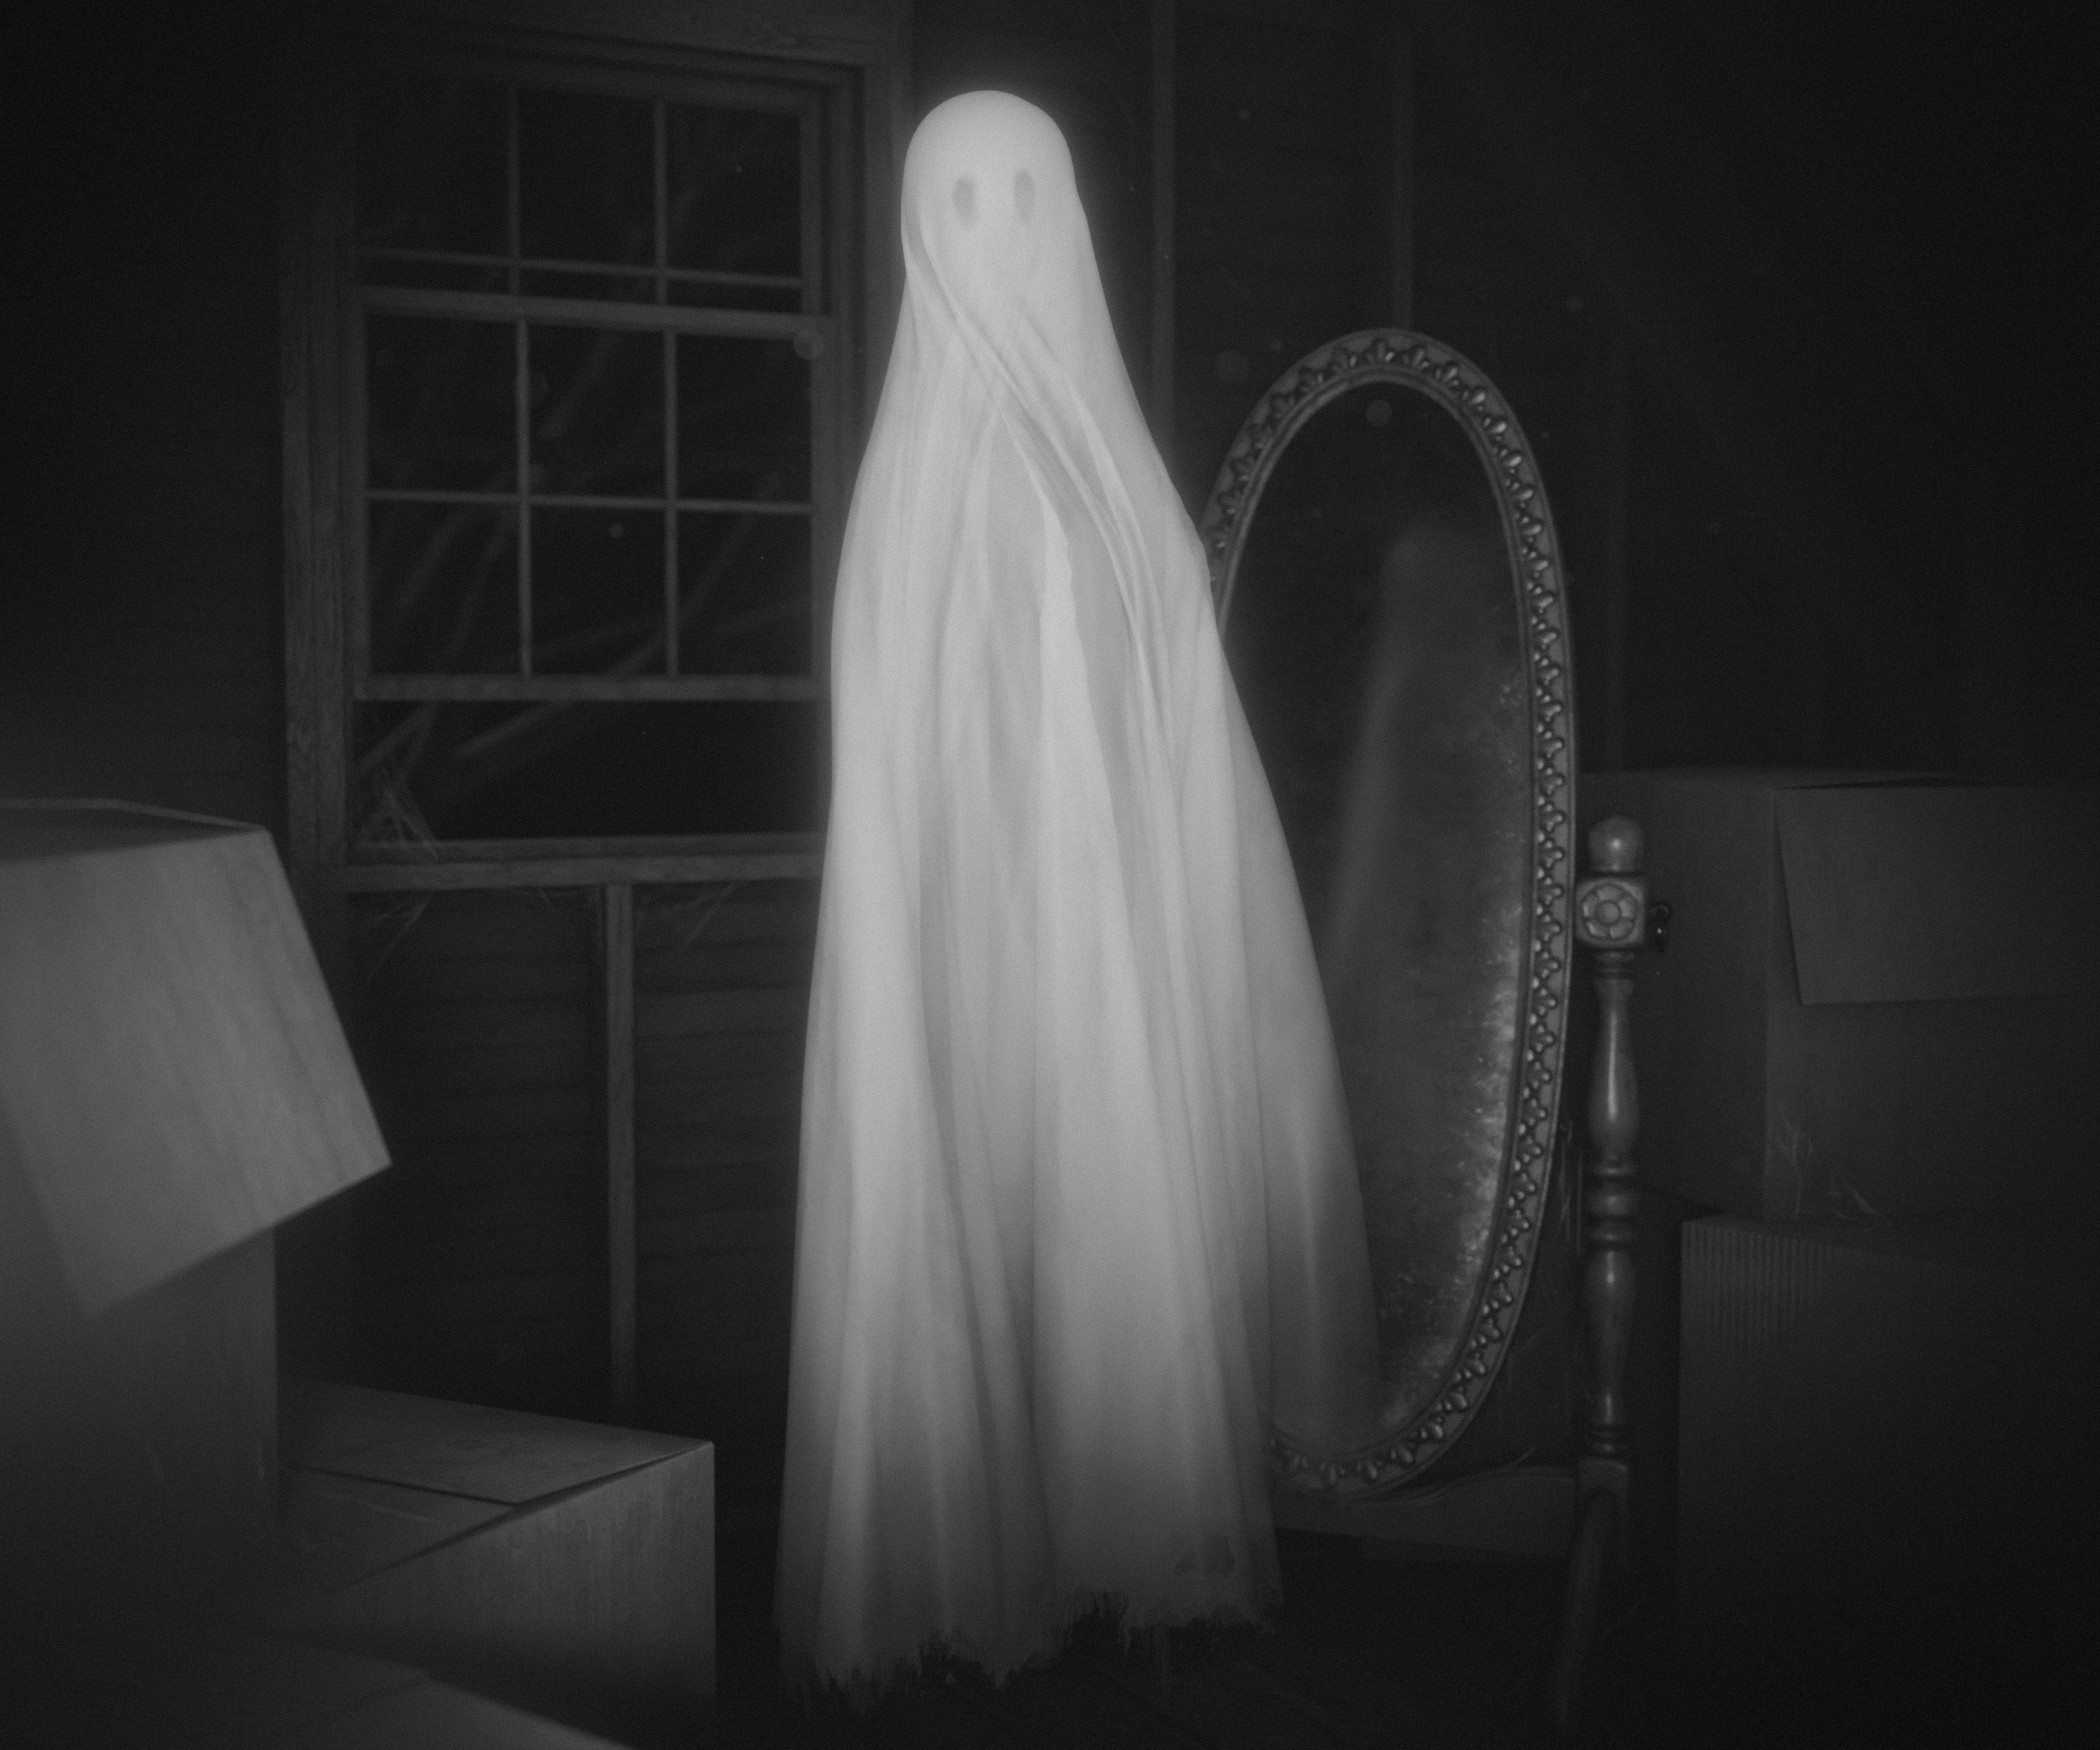 General 2100x1750 artwork spooky monochrome ghost